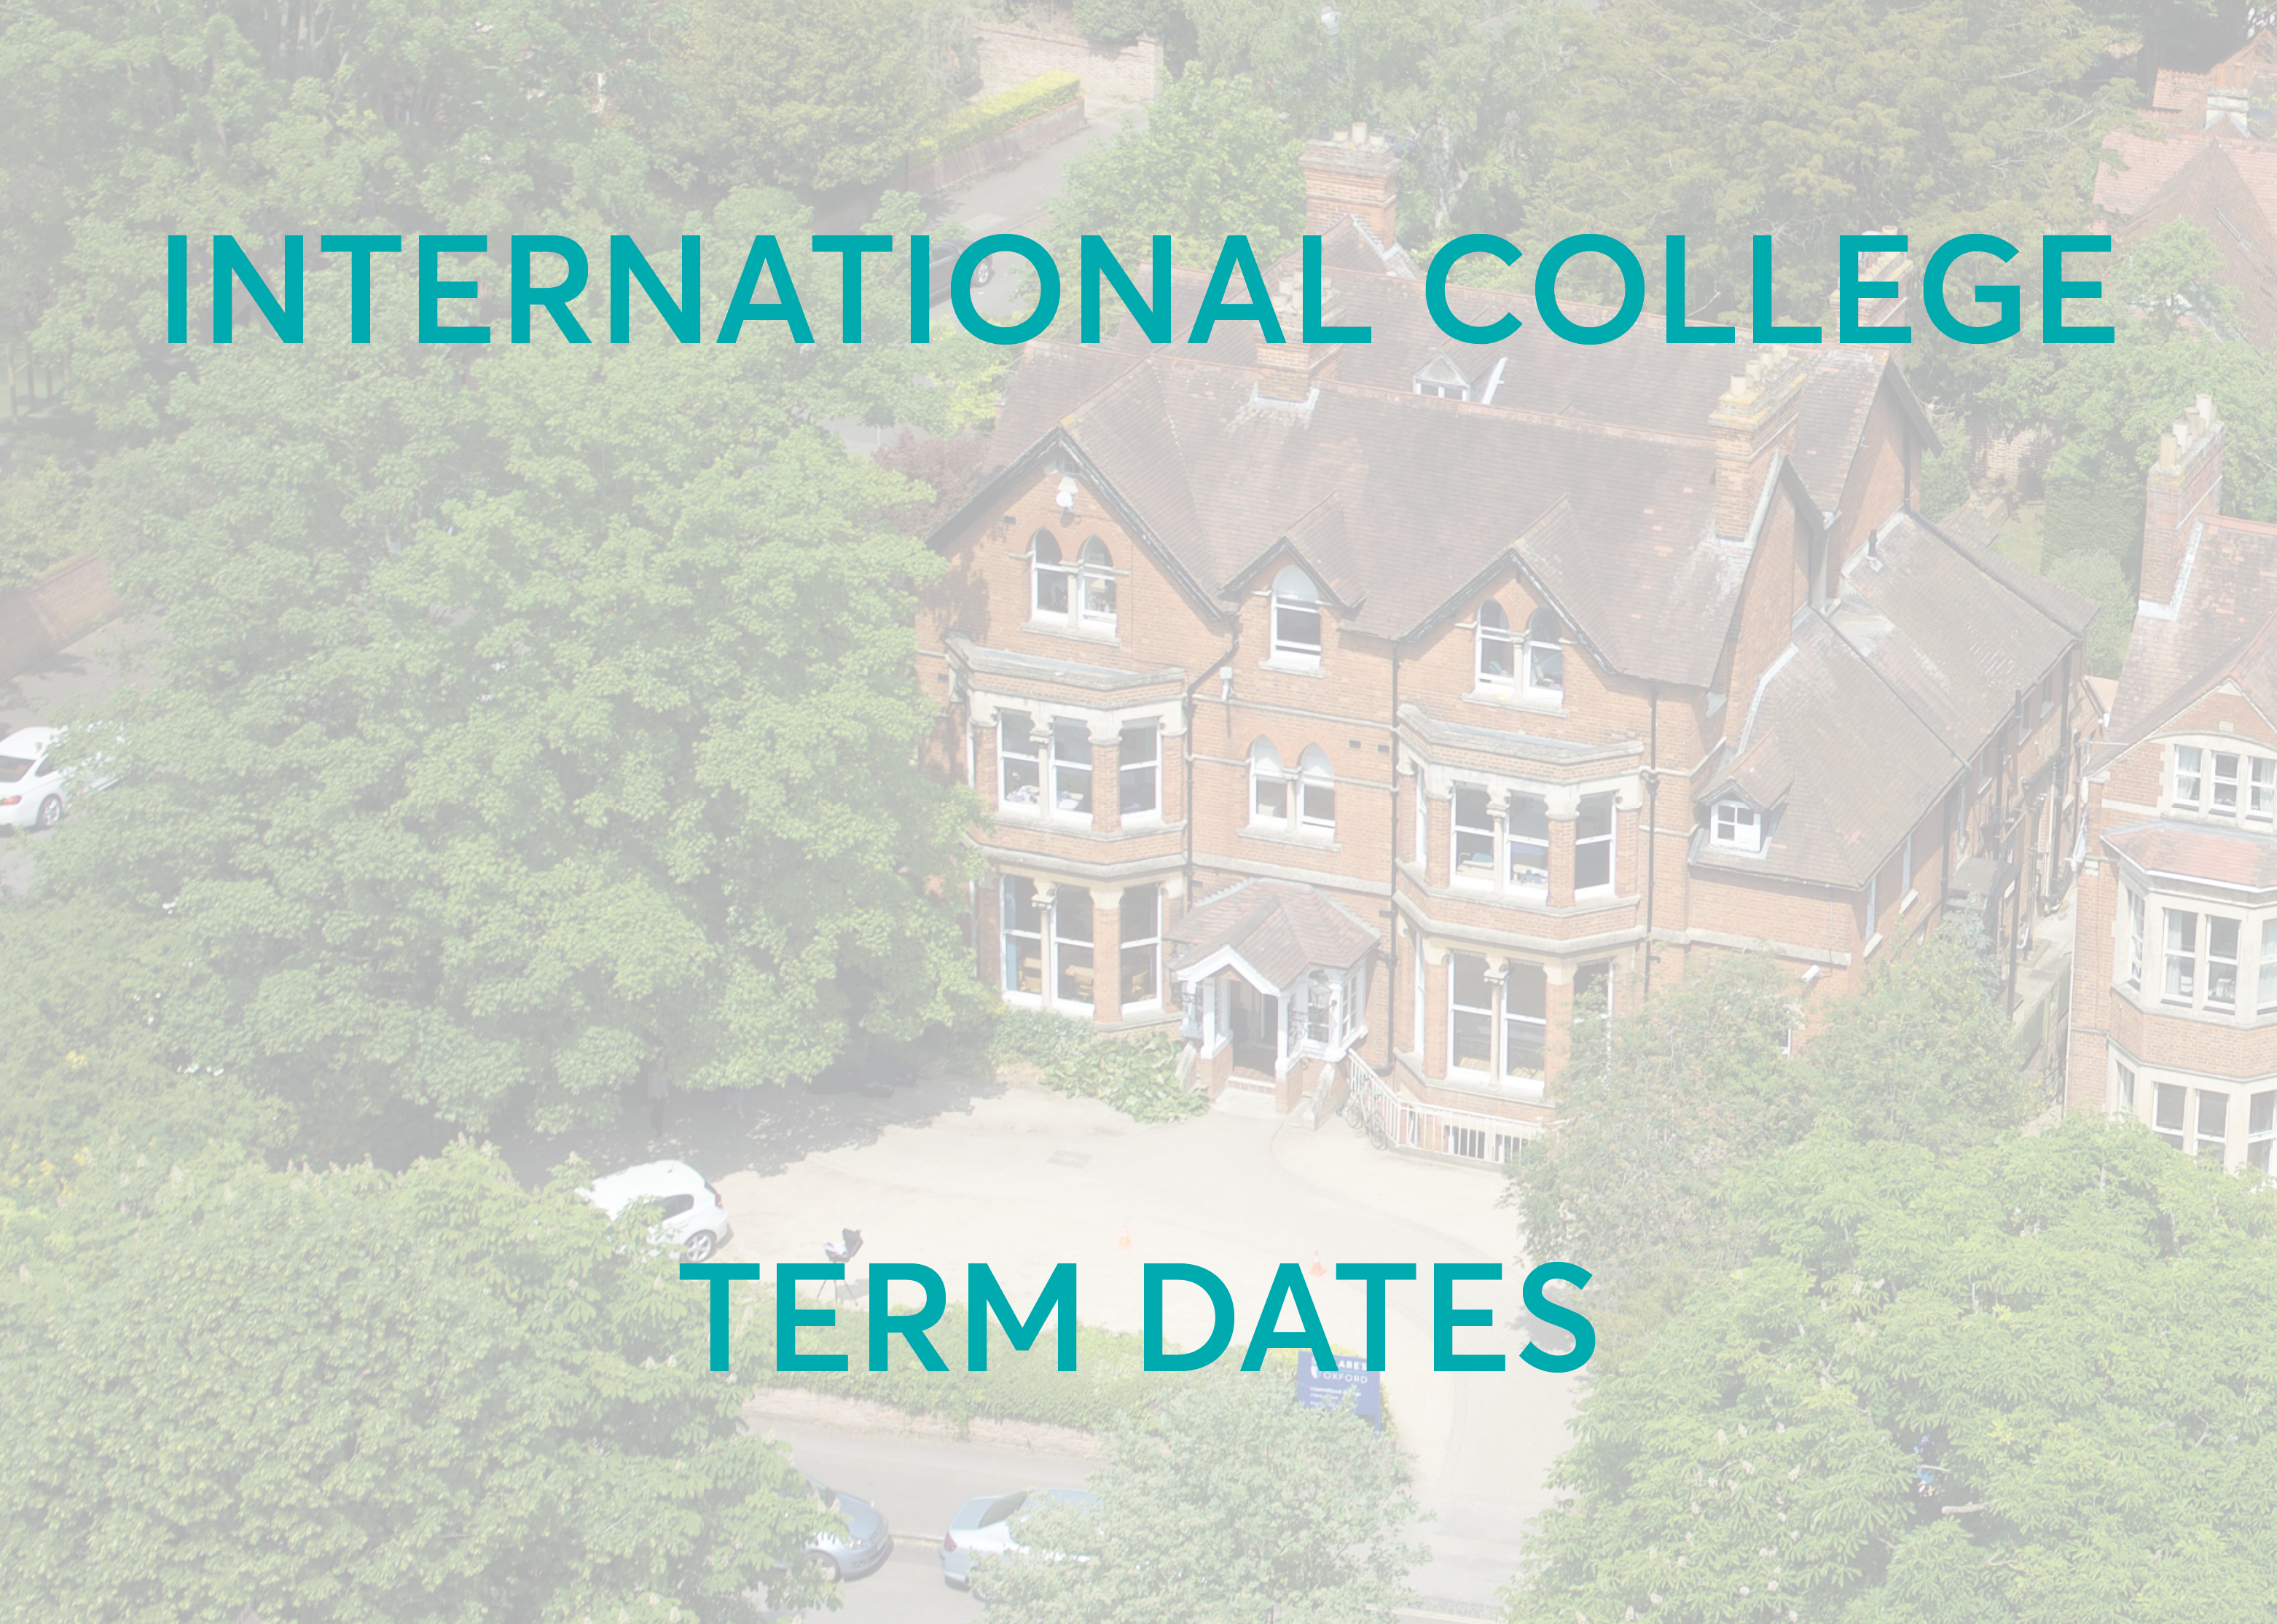 University Foundation Programme Term Dates